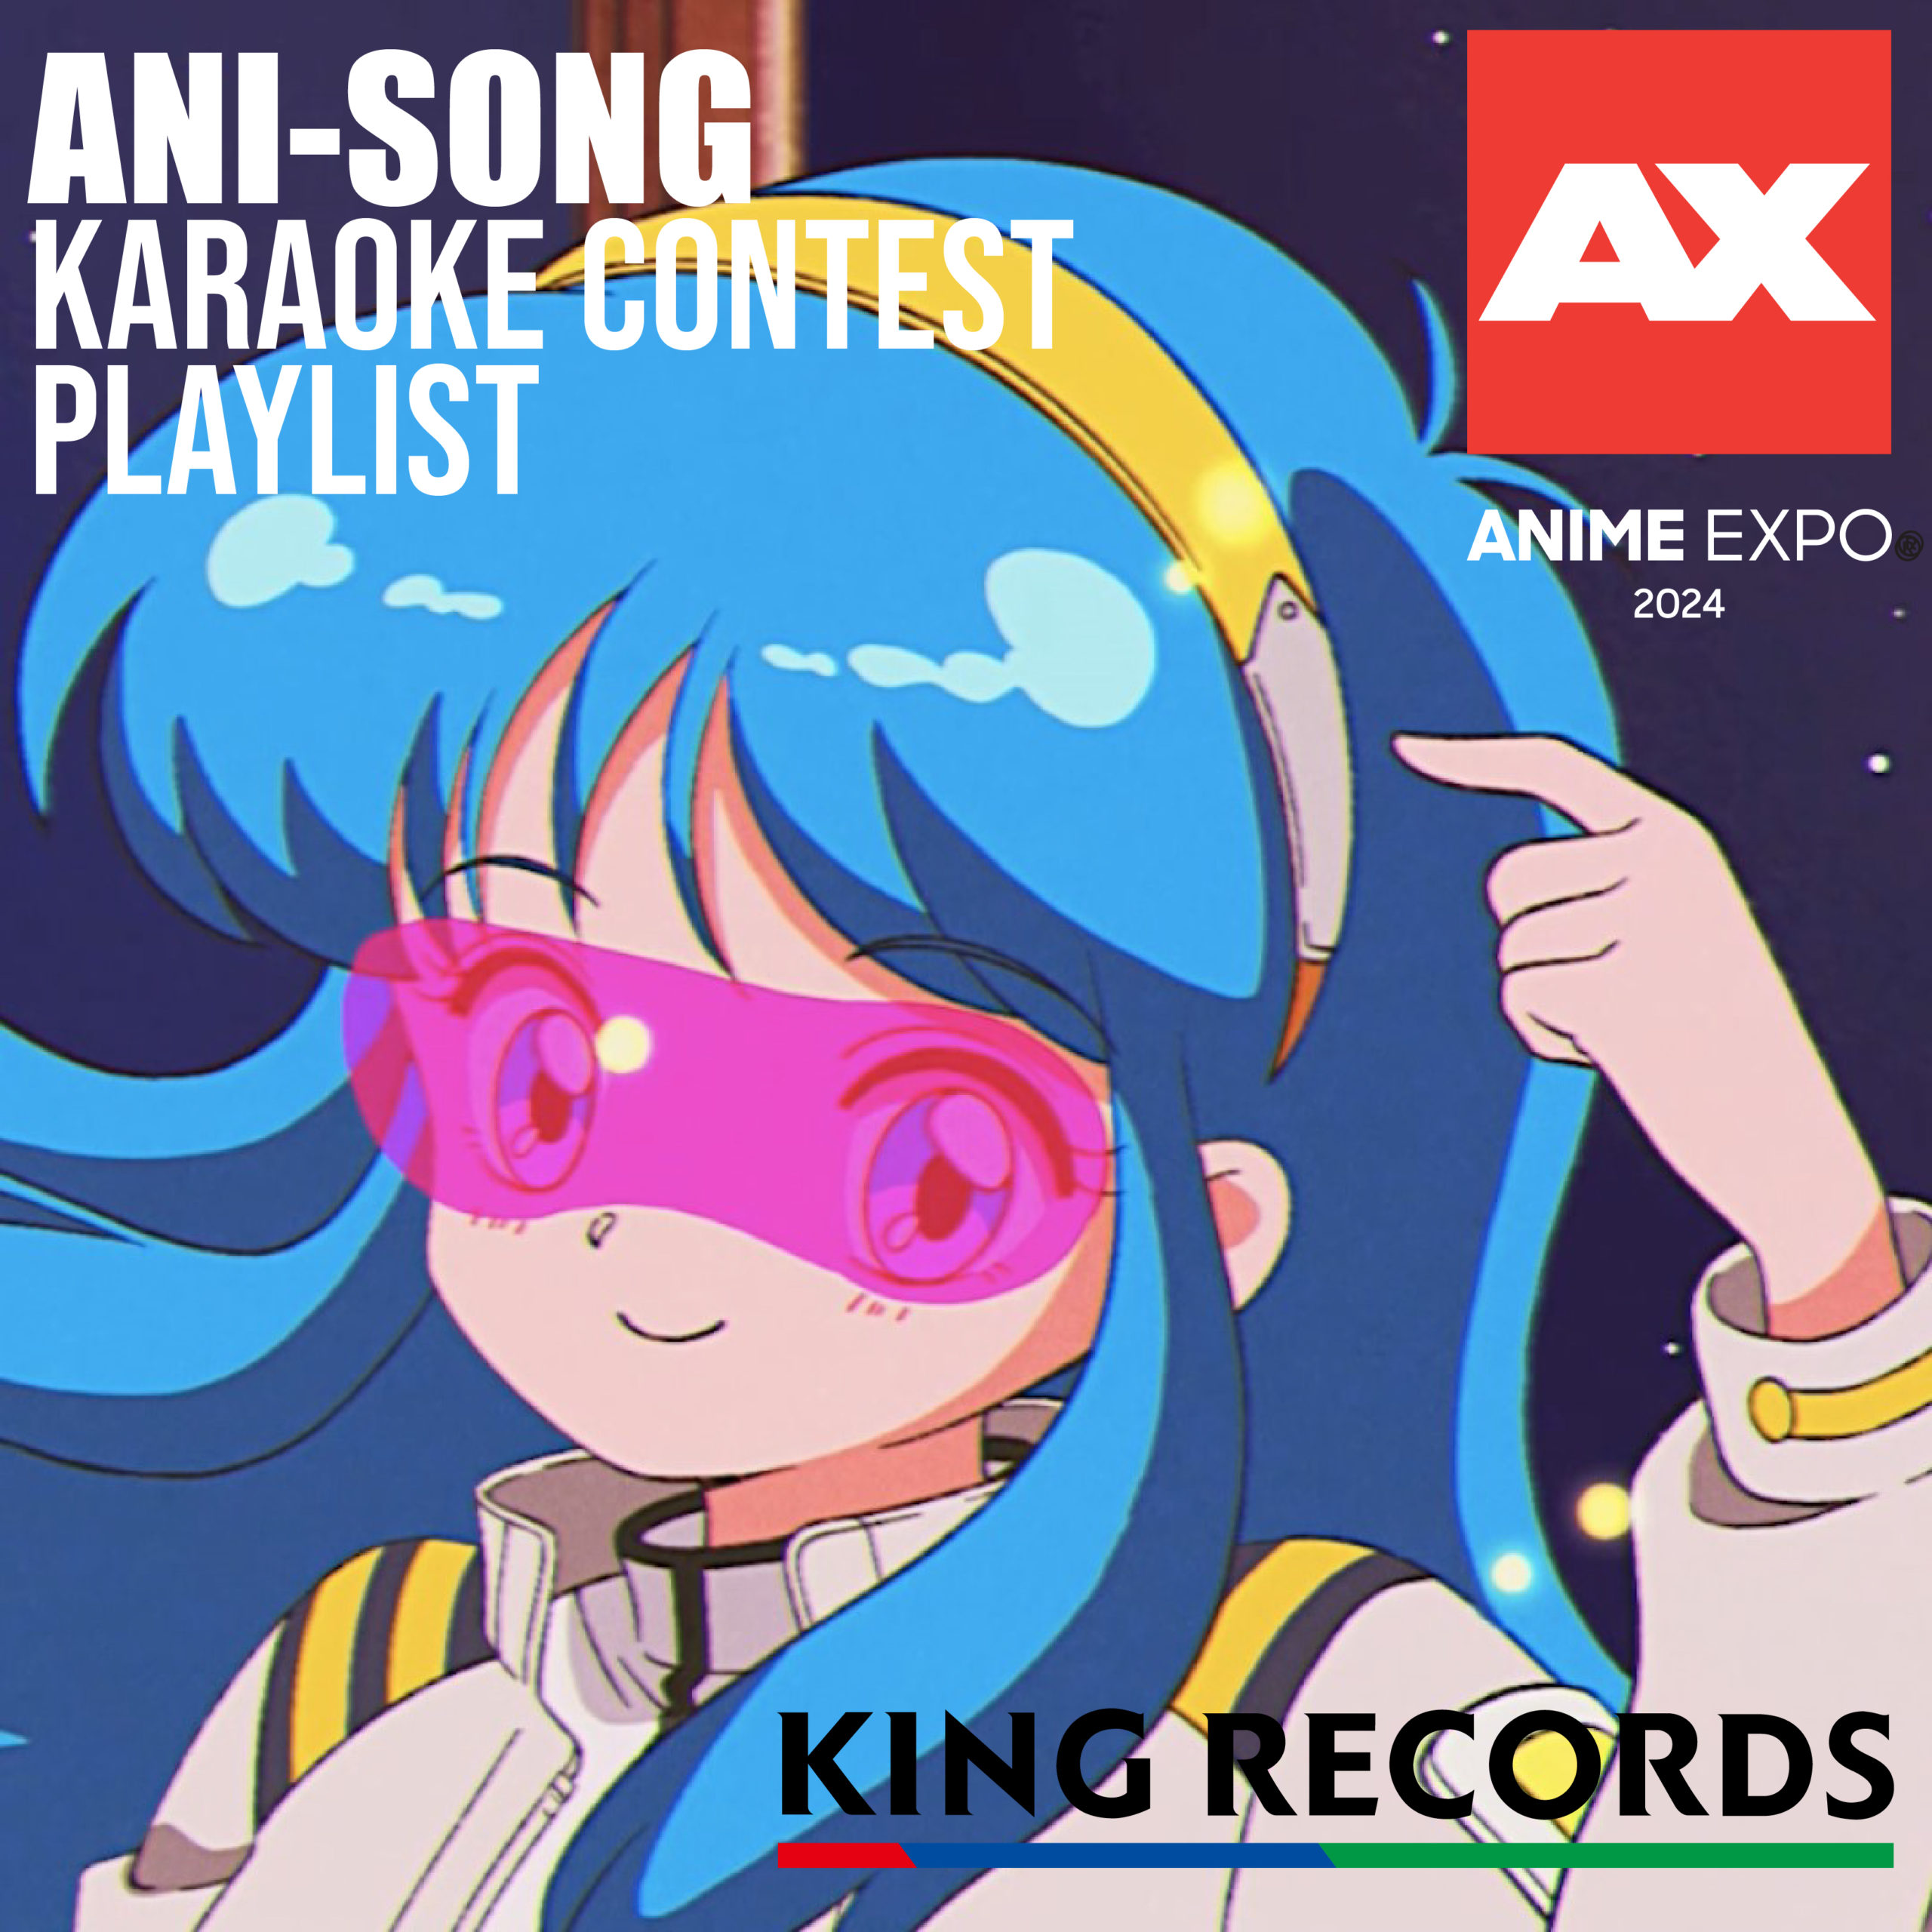 KING RECORDS ANI-SONG KARAOKE CONTEST